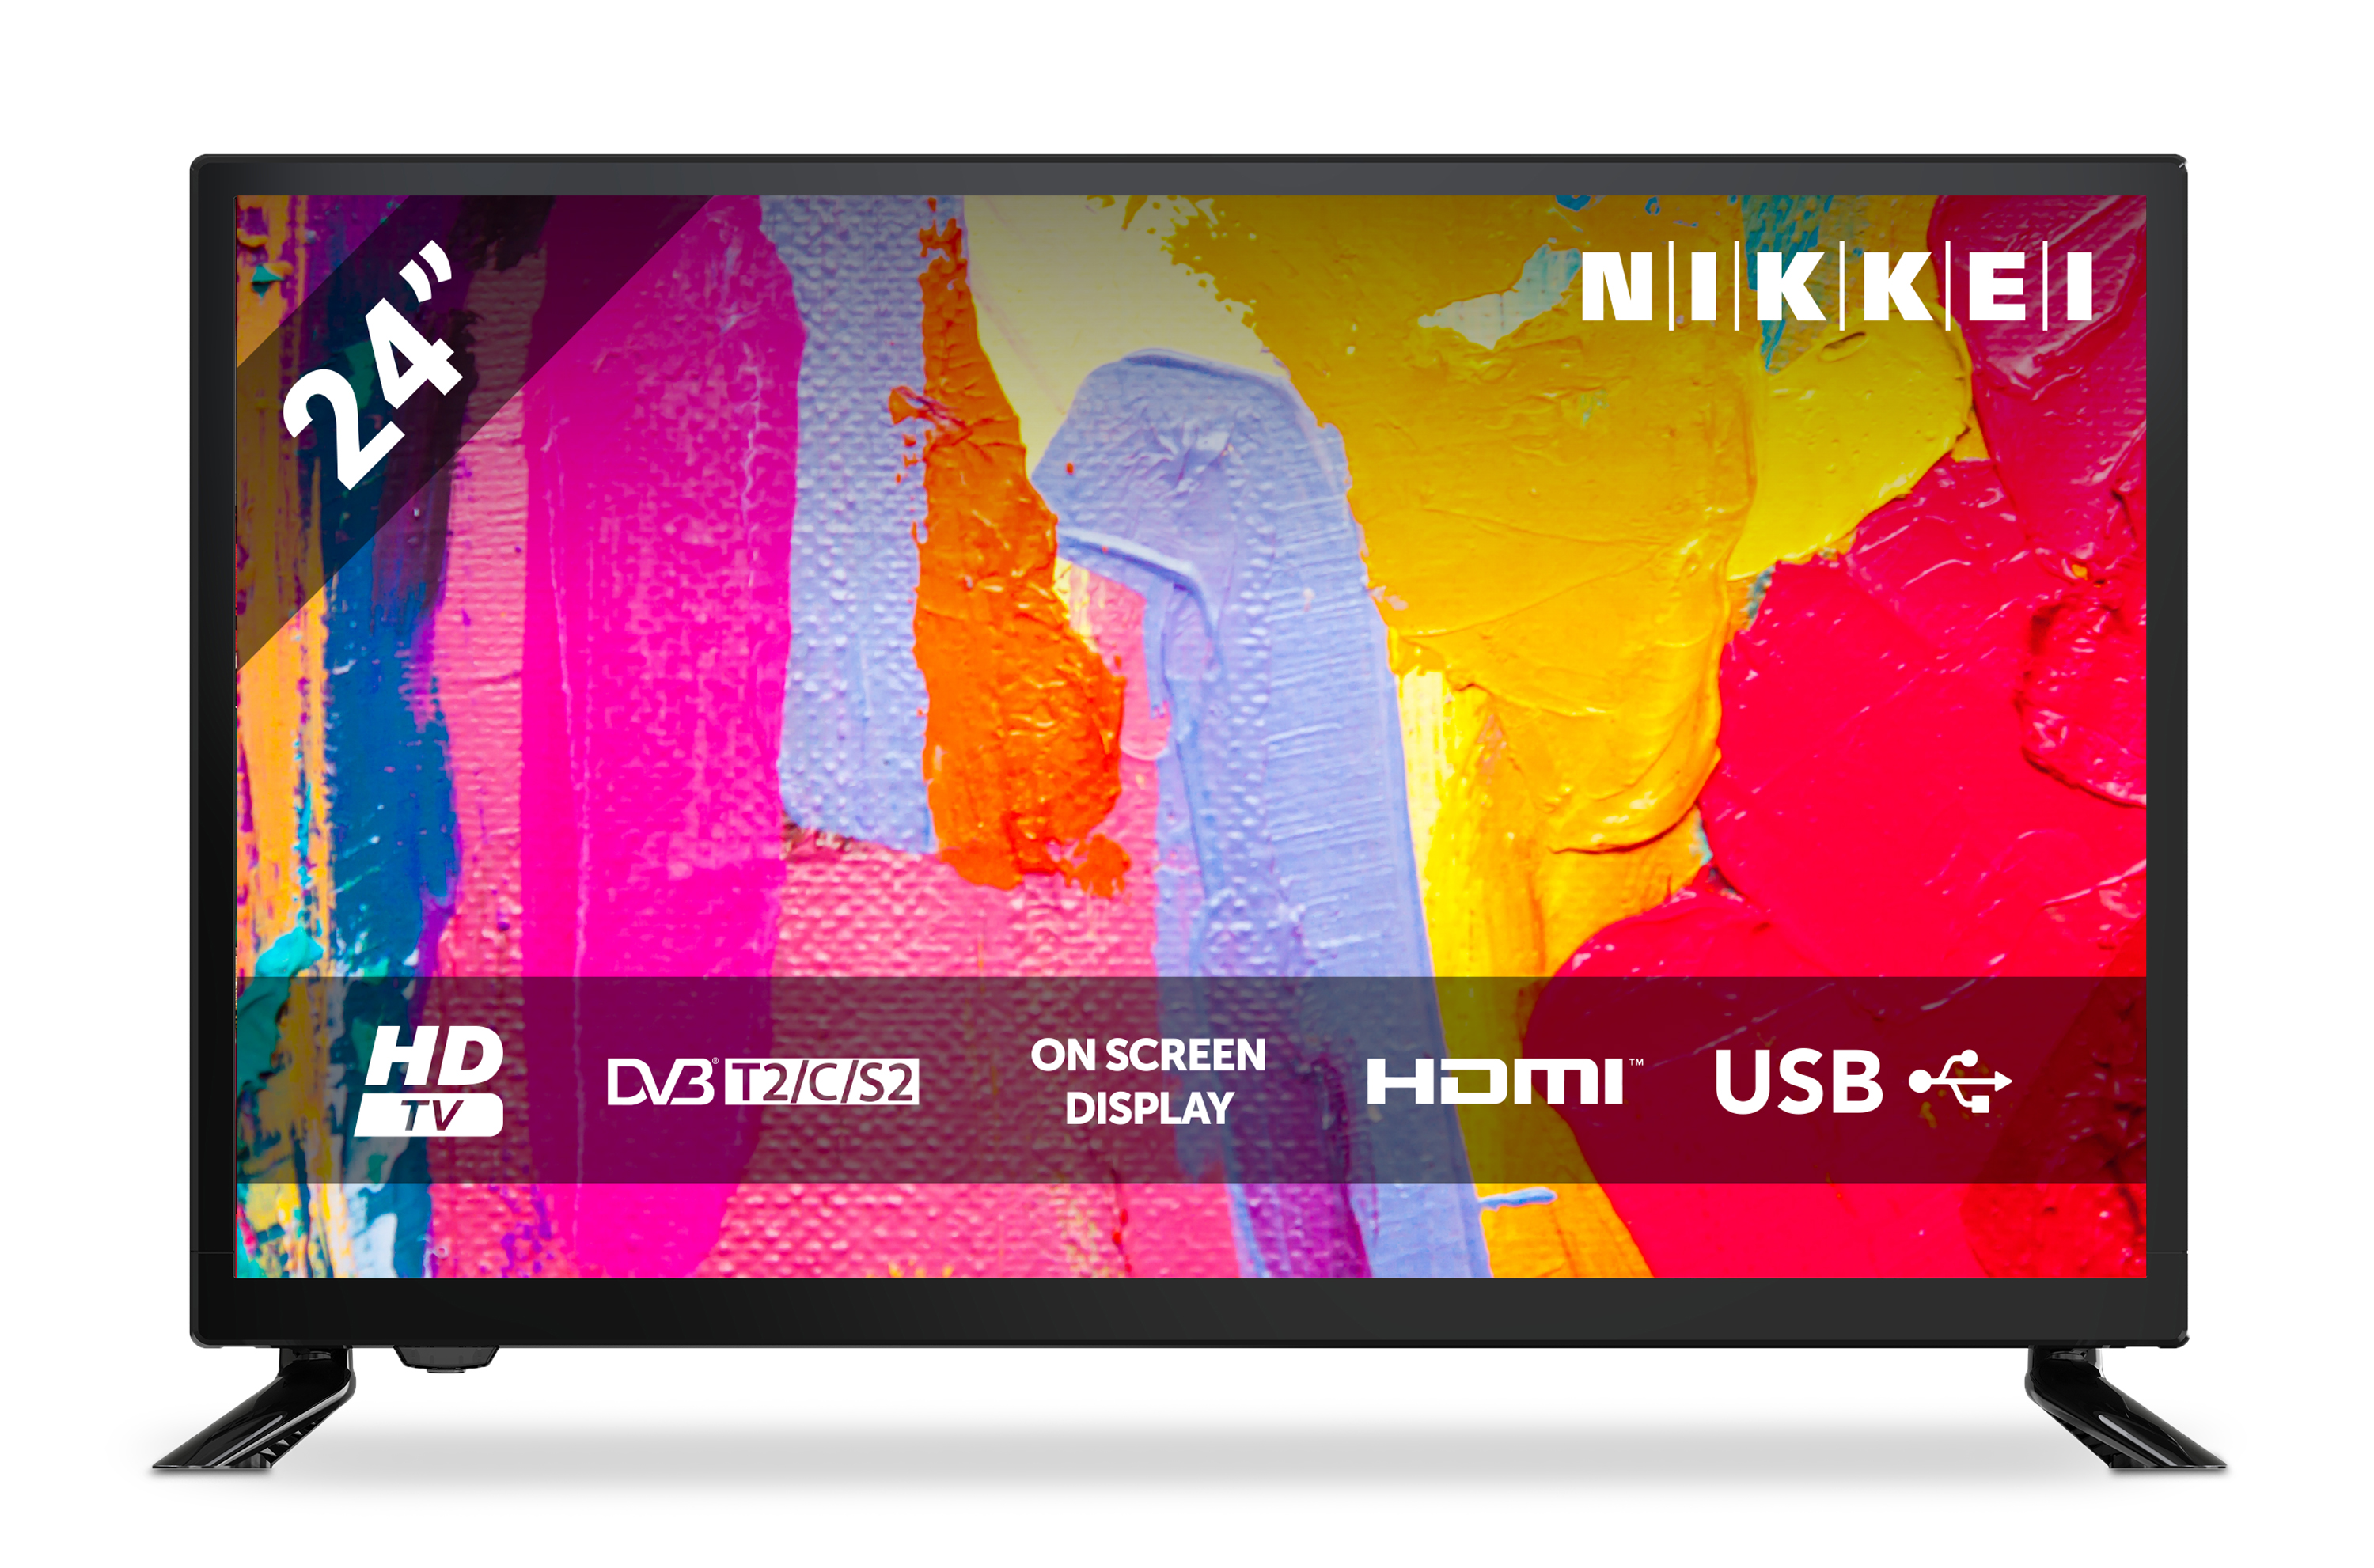 NIKKEI NH2424 LED TV (24 cm, HD-ready) Zoll / 61